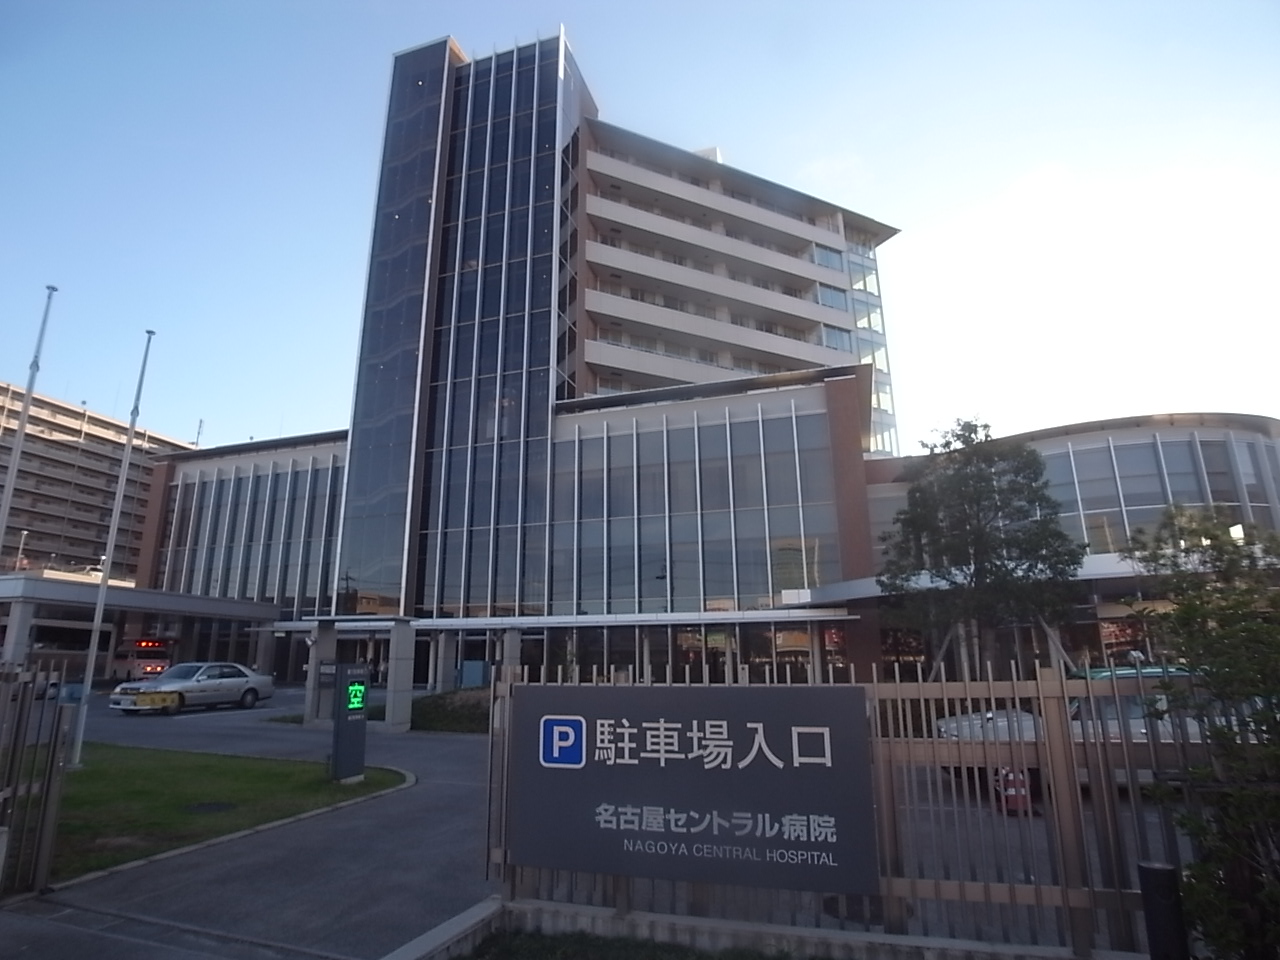 Hospital. 597m to Nagoya Central Hospital (Hospital)